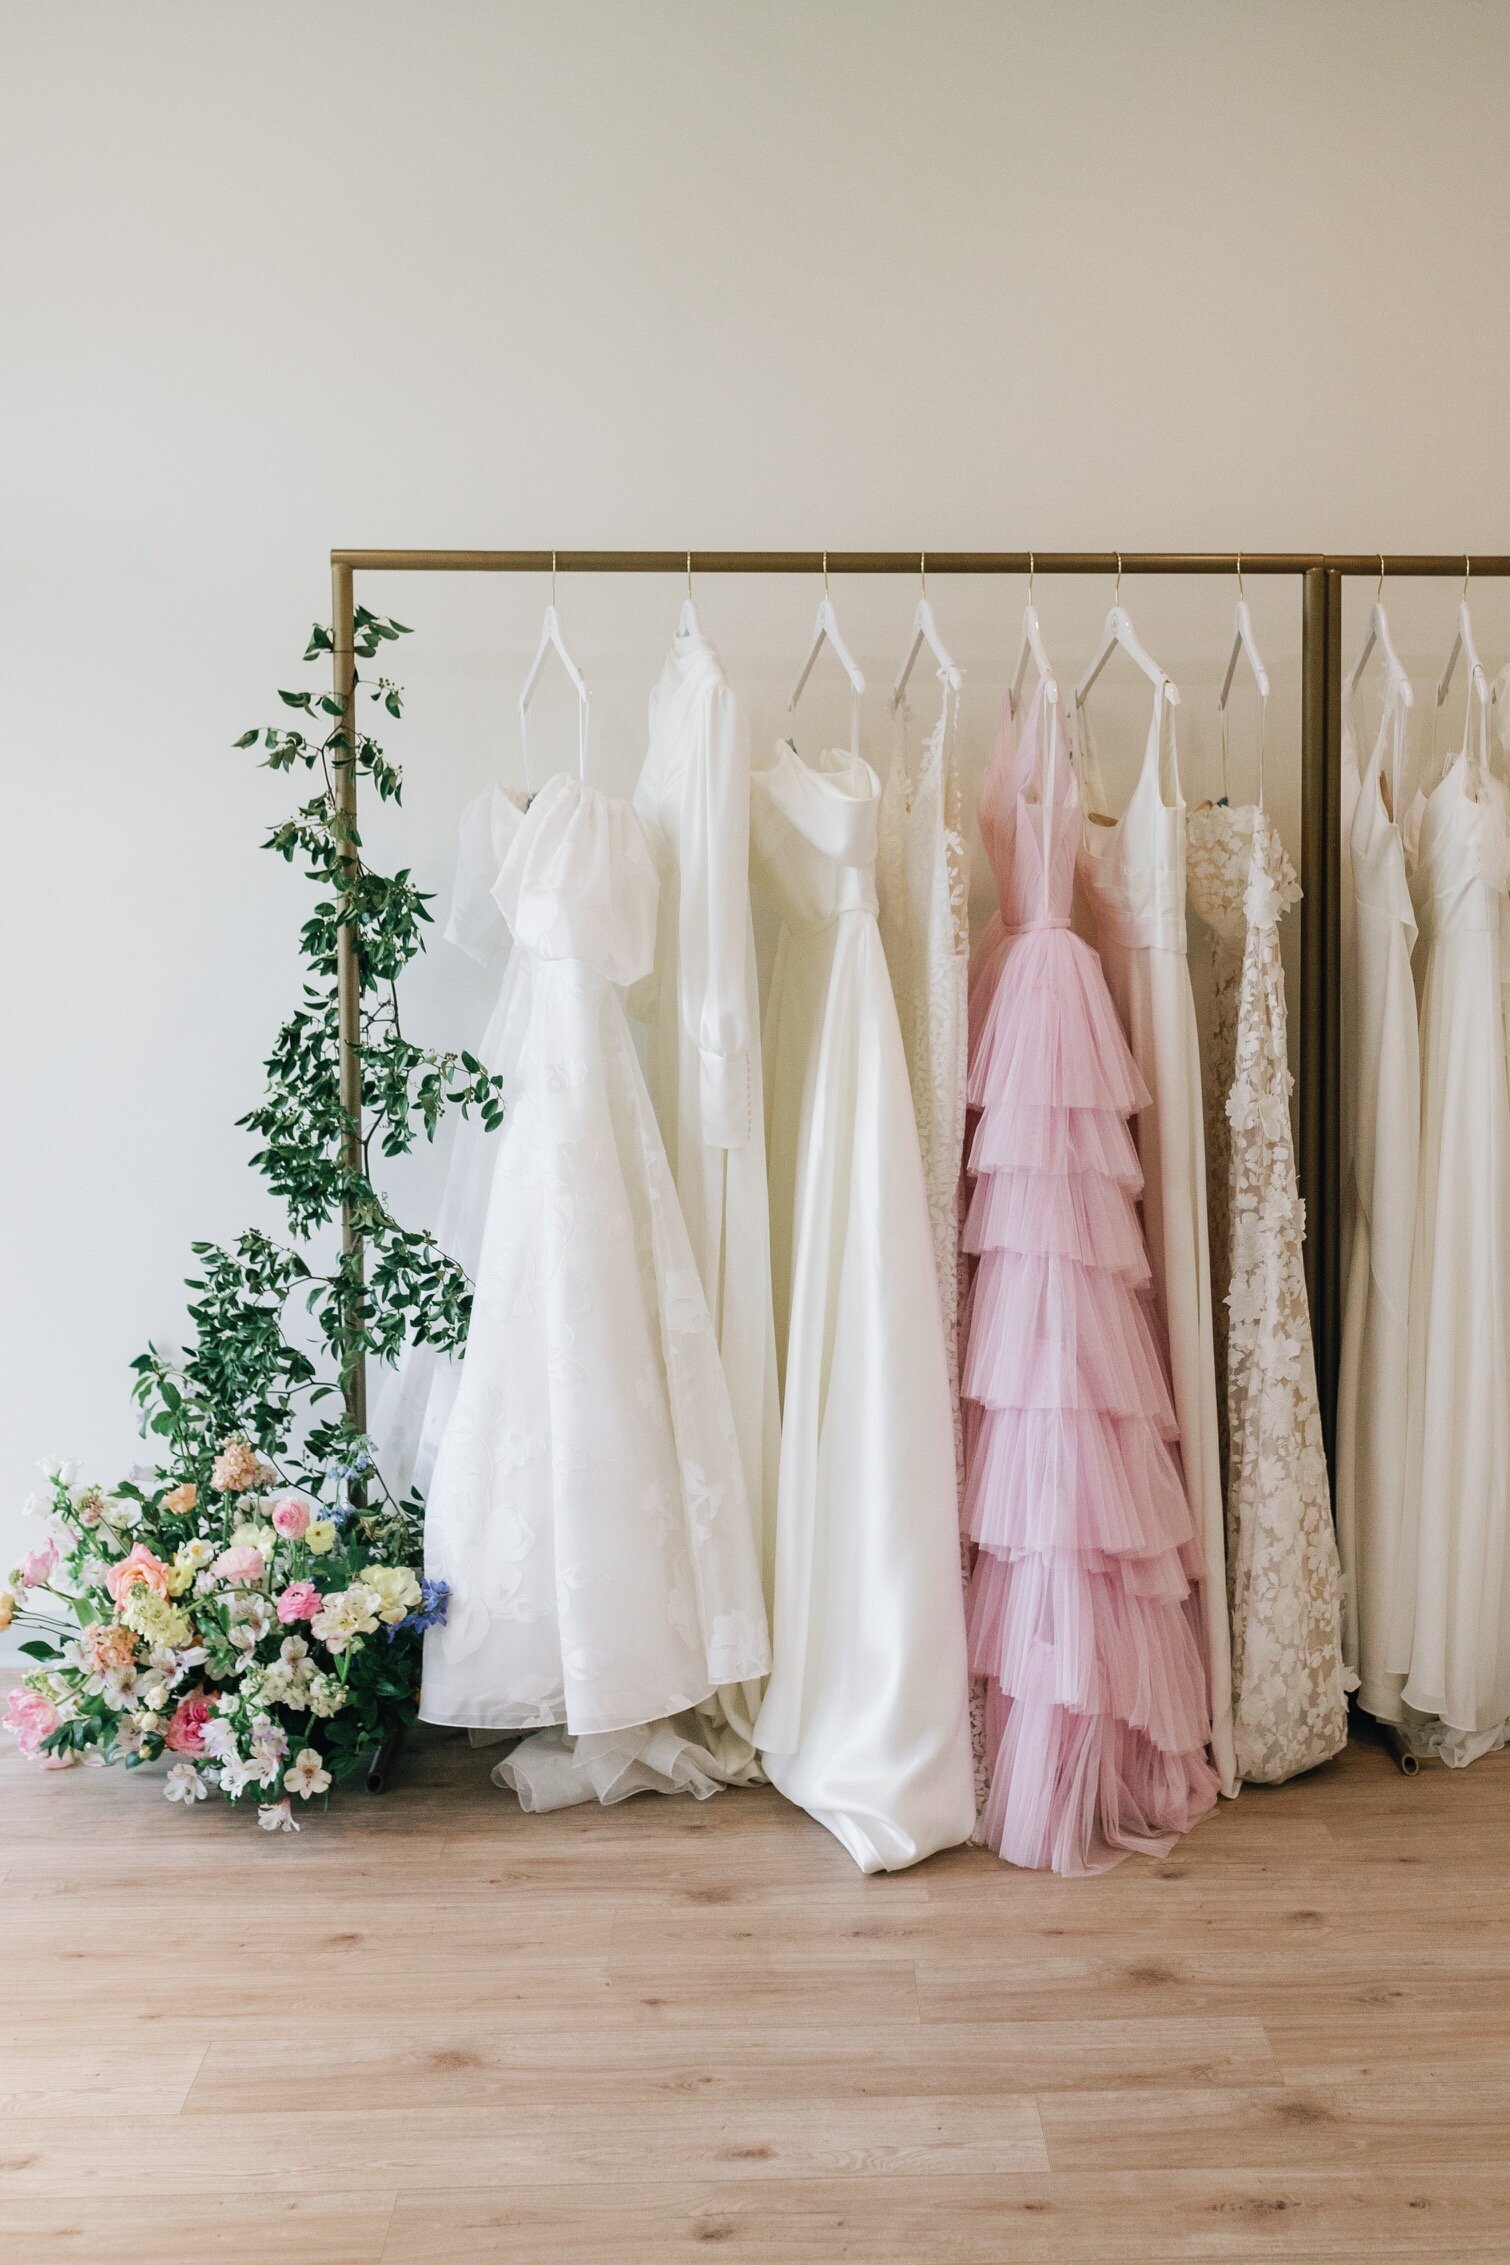 Wedding dresses on a rack at Elizabeth Cole Bridal, a bridal shop in Columbia SC.